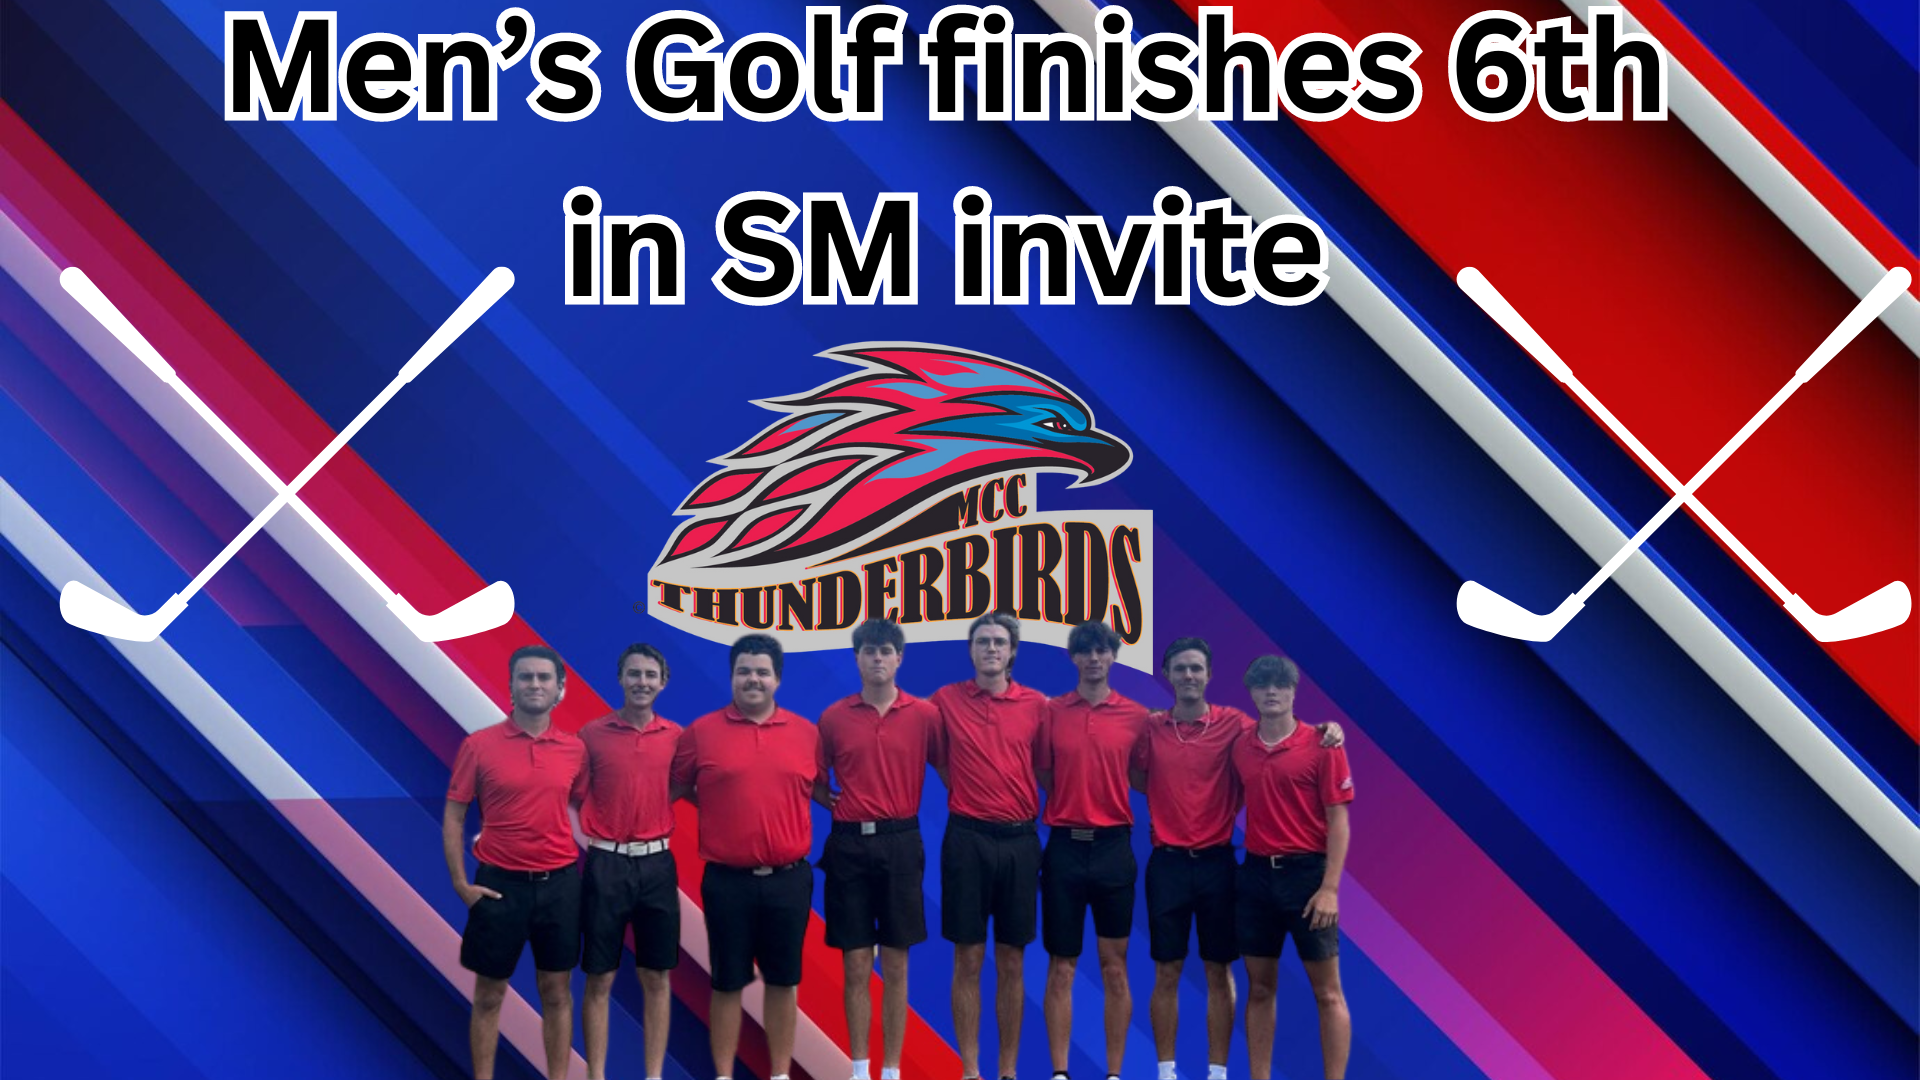 T-Bird men's golf finish 6th at SM Invite